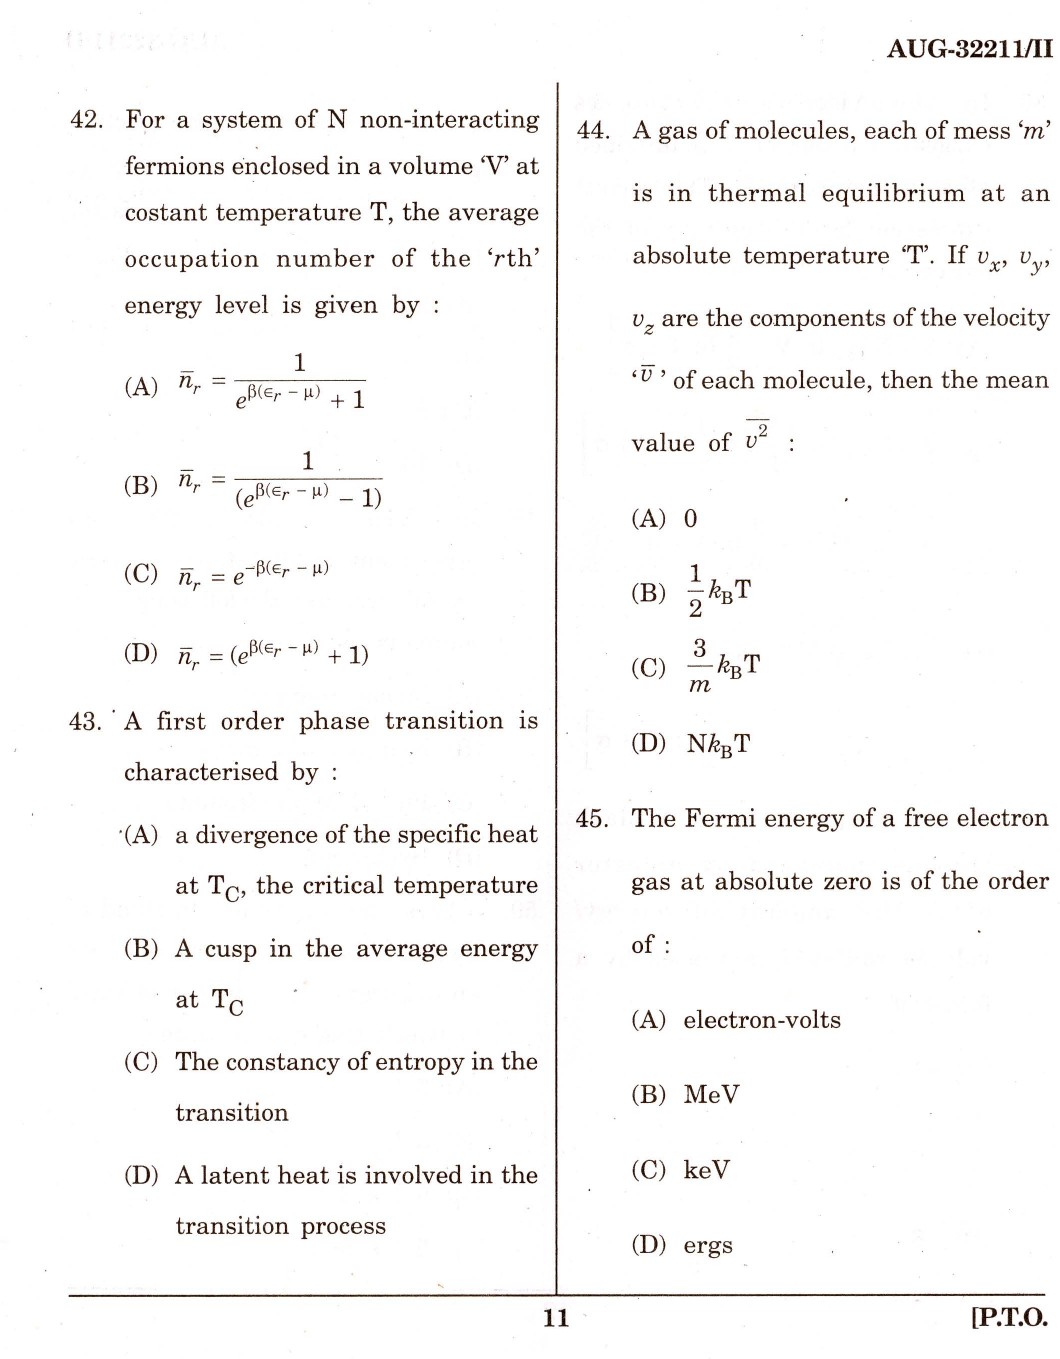 Maharashtra SET Physics Question Paper II August 2011 11